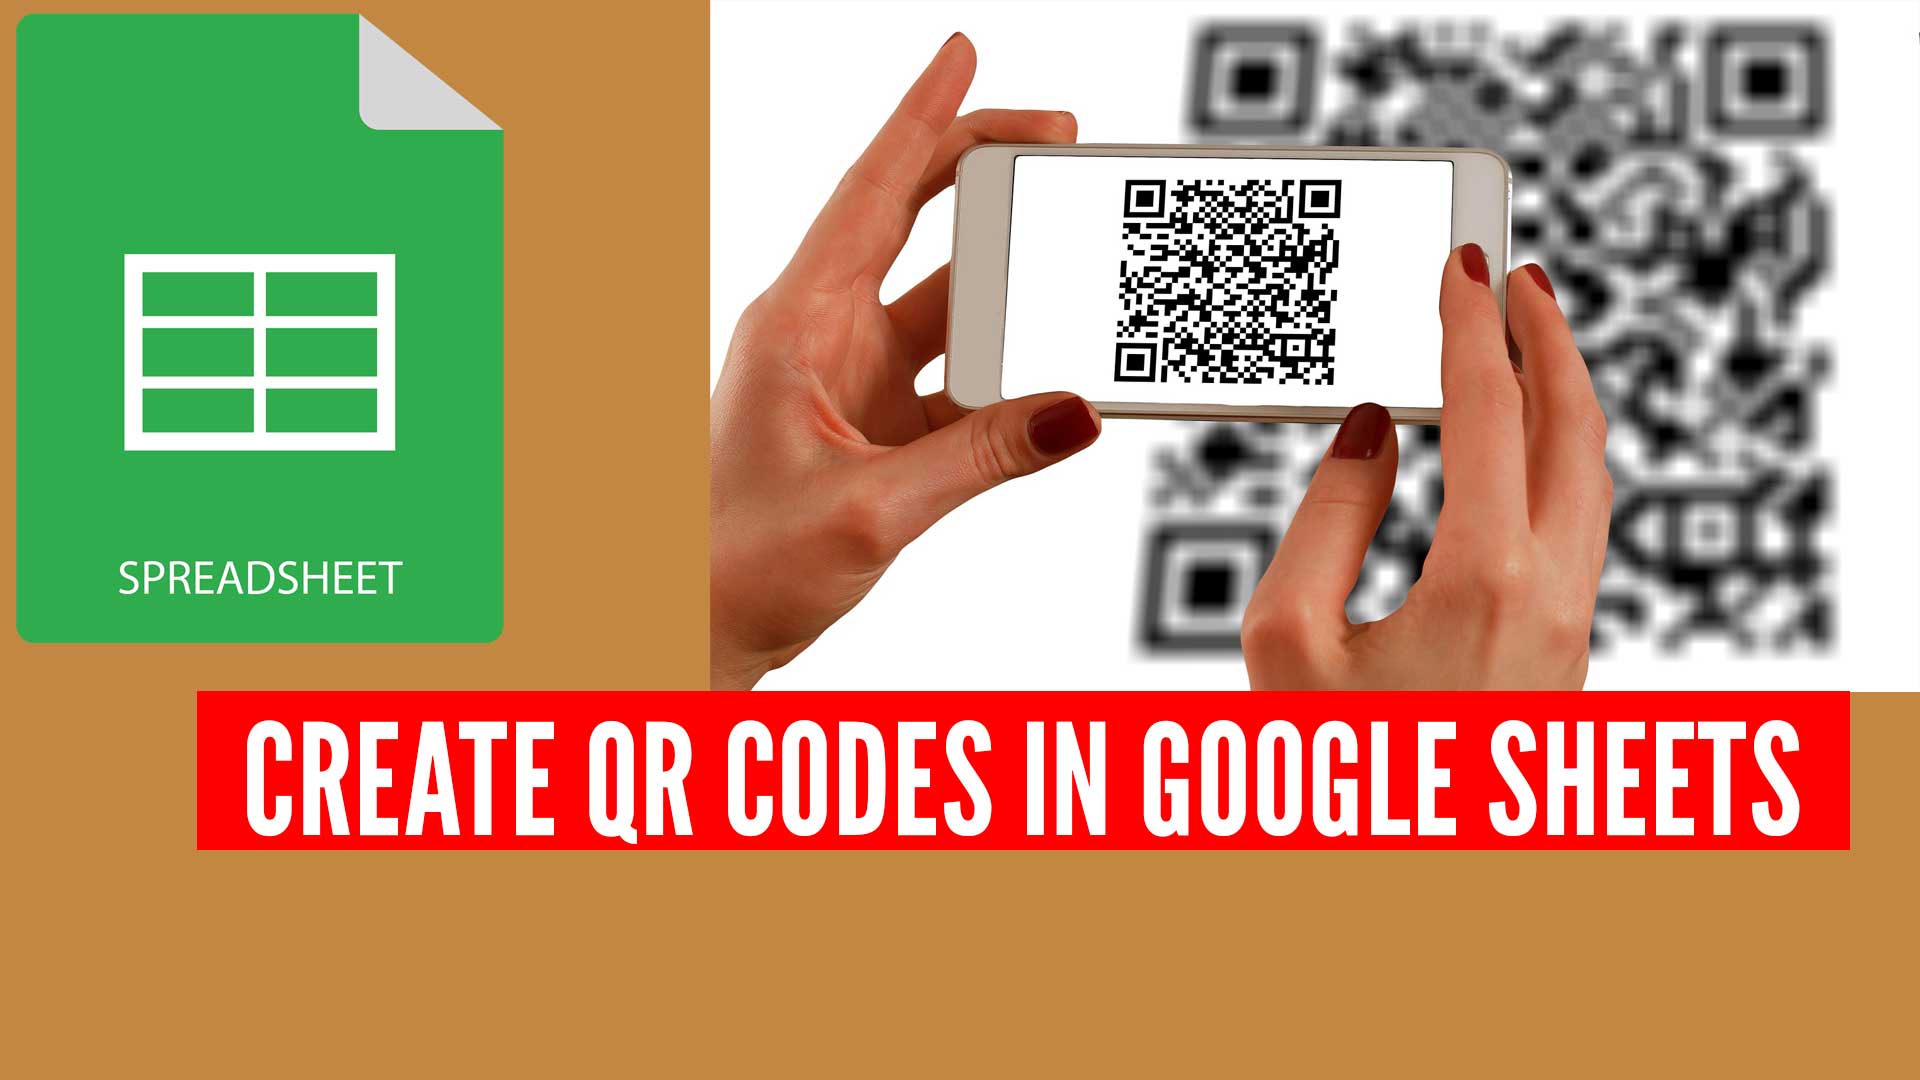 Google Spreadsheet logo and a smartphone scanning a QR code.